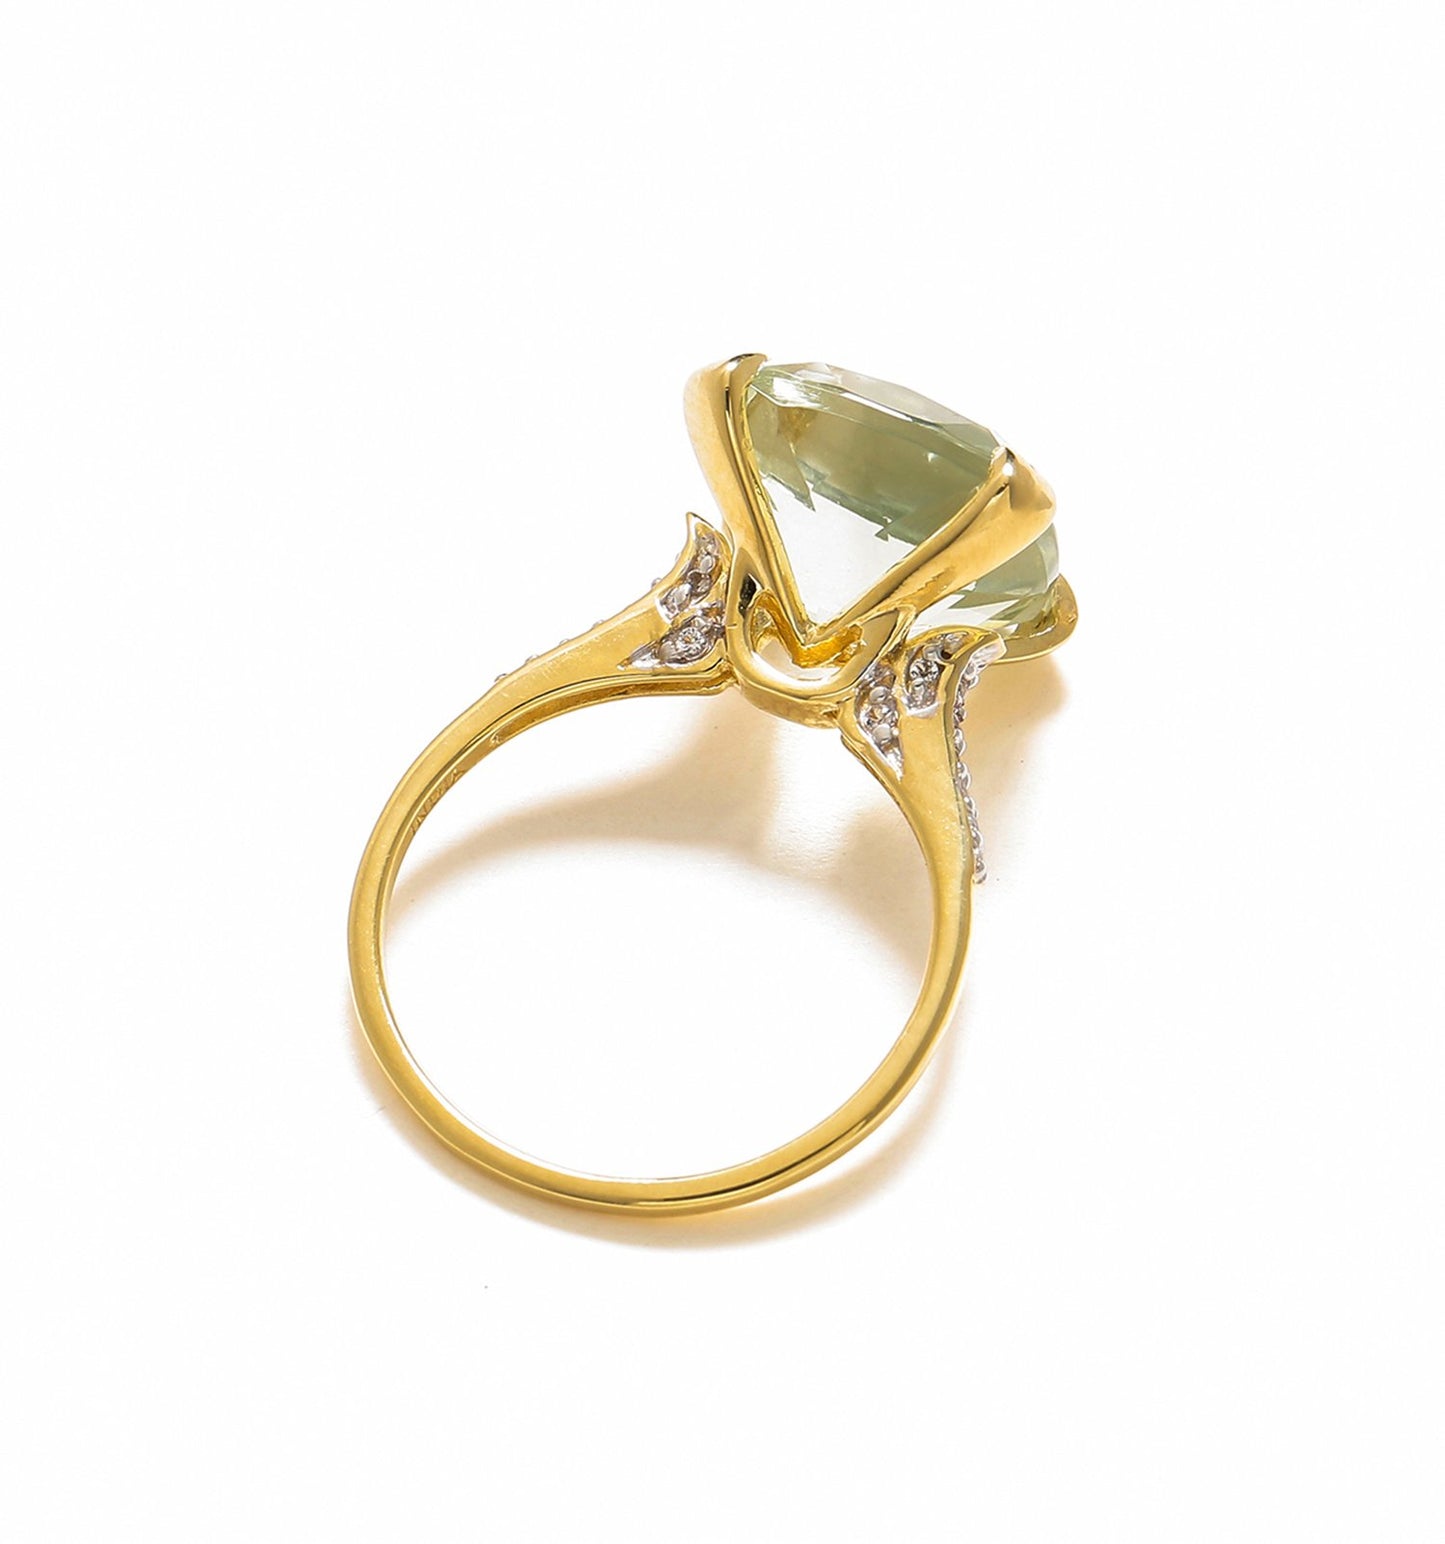 Tiramisu 6.11 Ct Green Amethyst Solid 10k Yellow Gold Statement Ring Jewelry